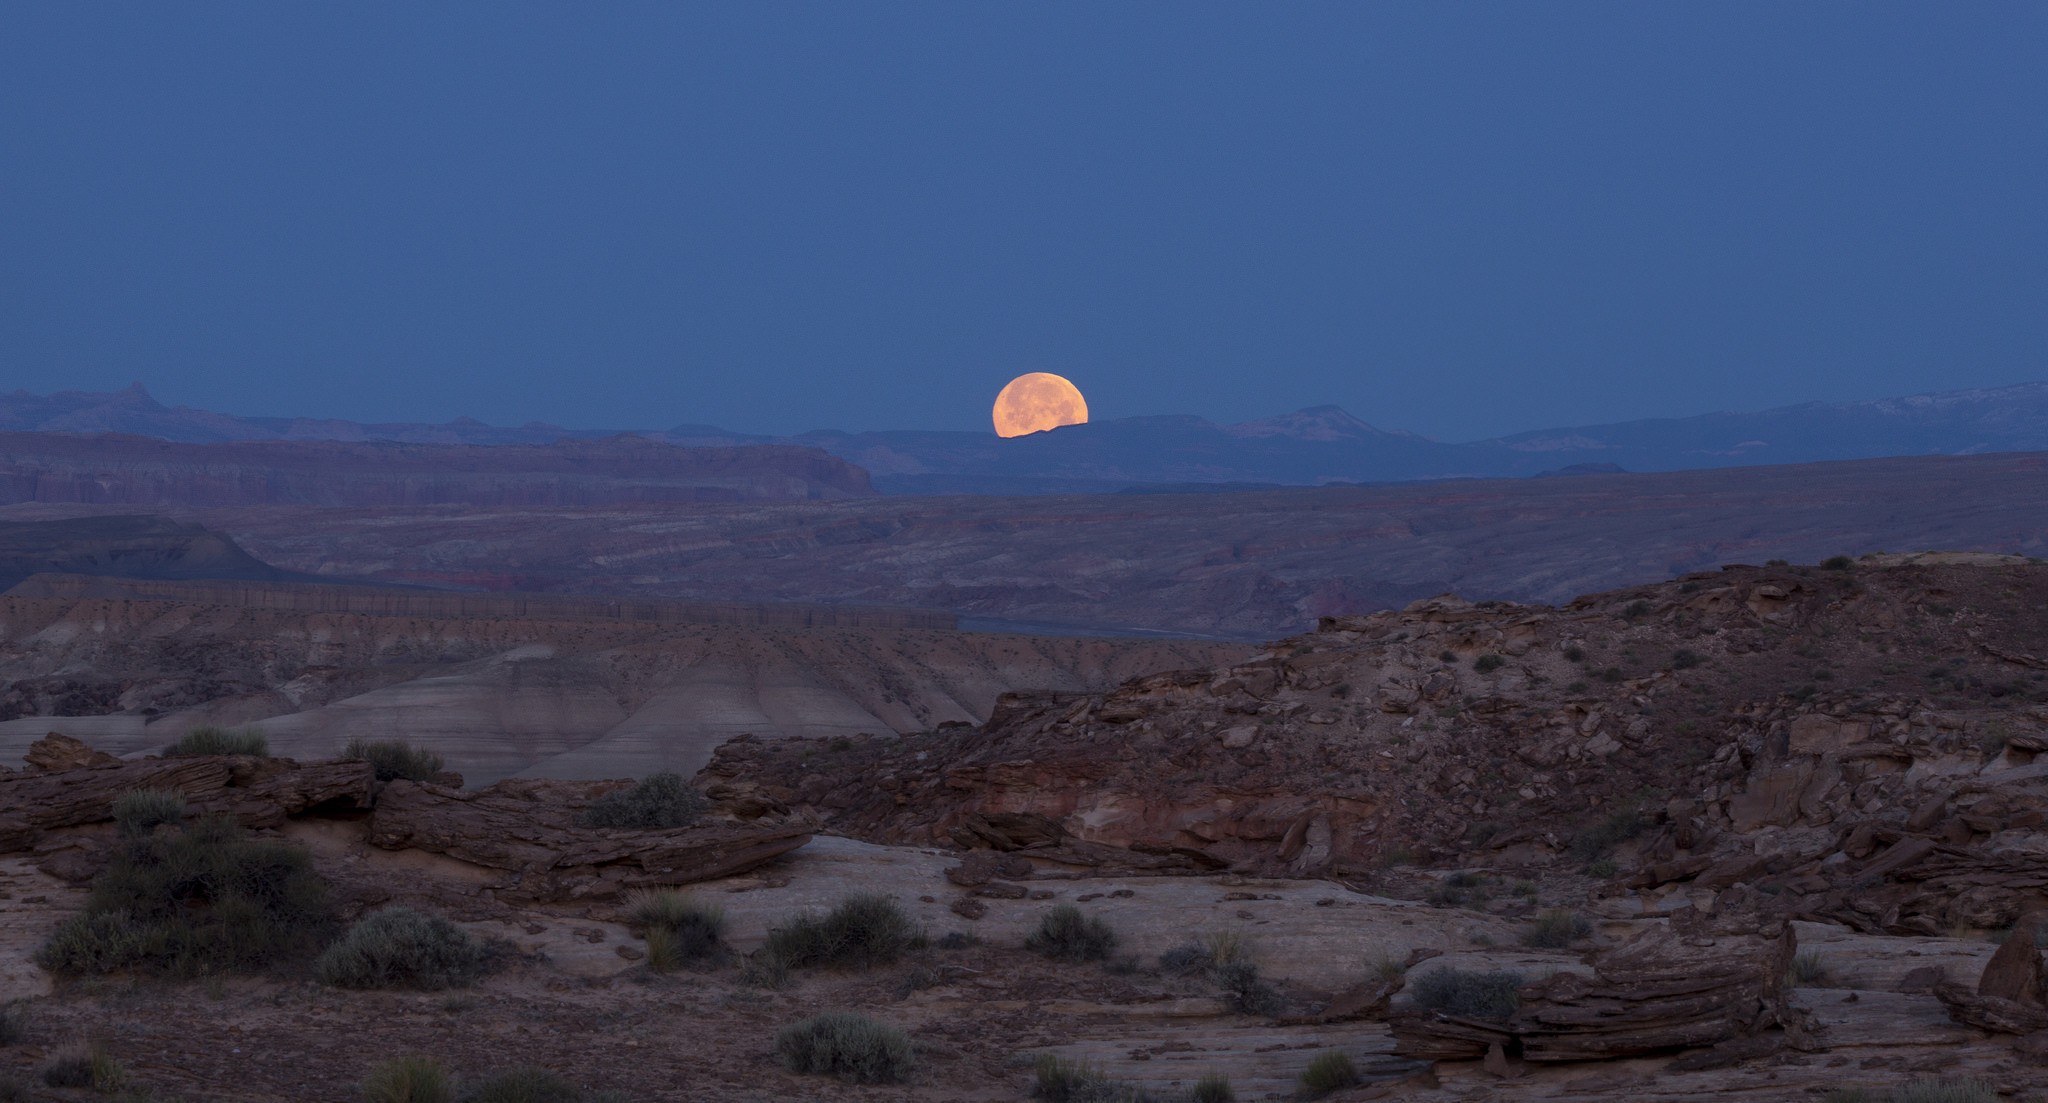 General 2048x1103 landscape Moon desert night mountains nature